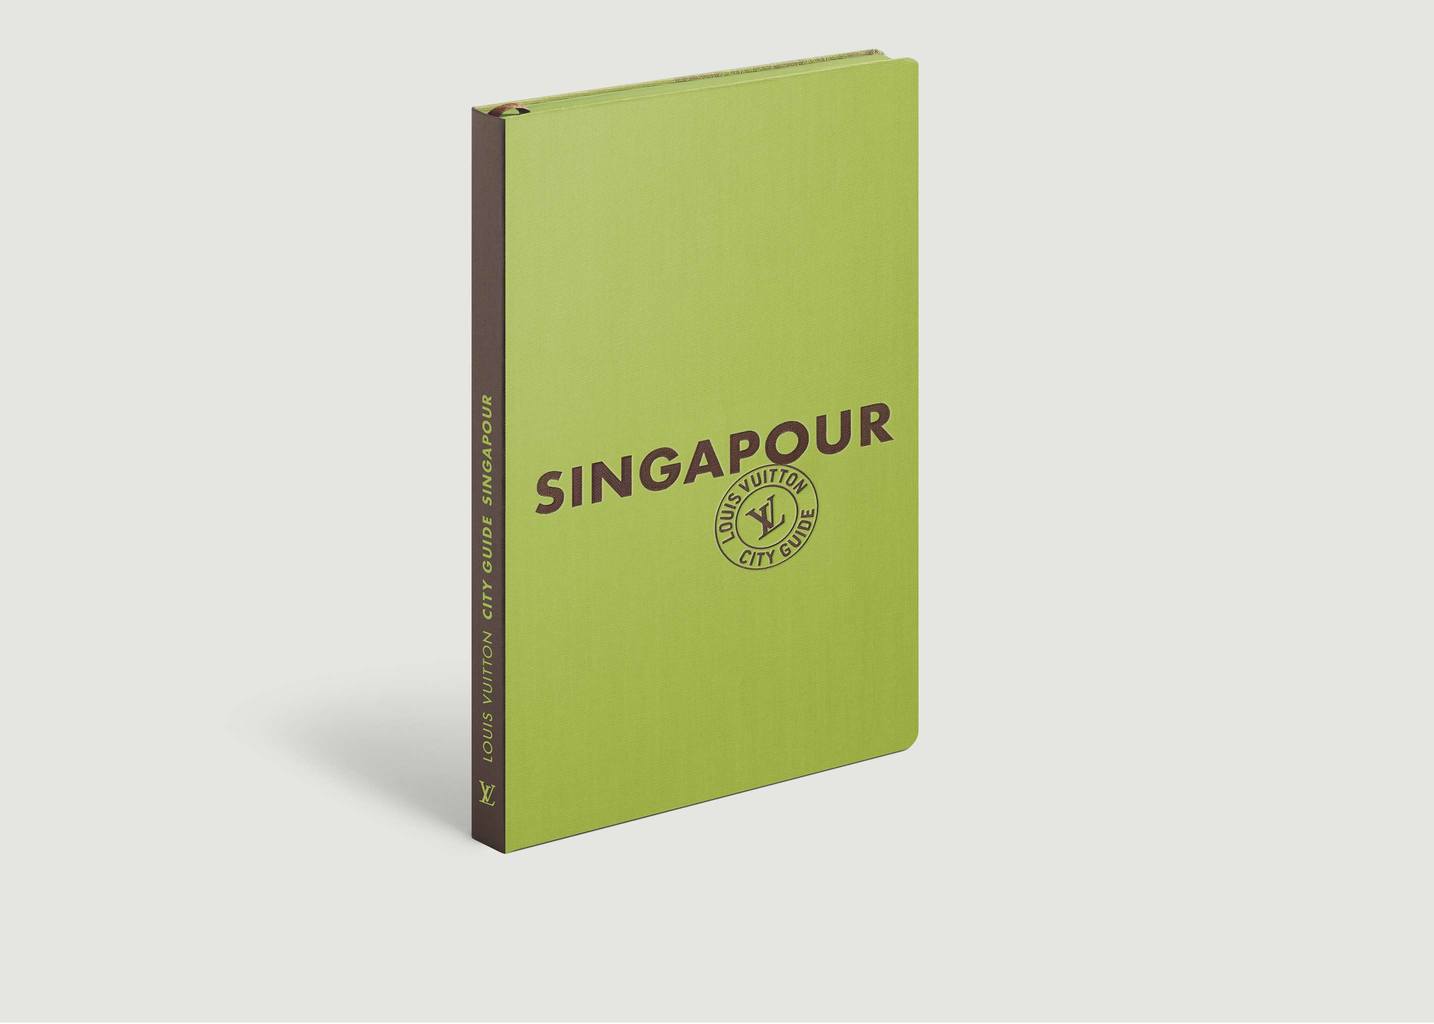 City Guide Singapore 2020 - Louis Vuitton Travel Book